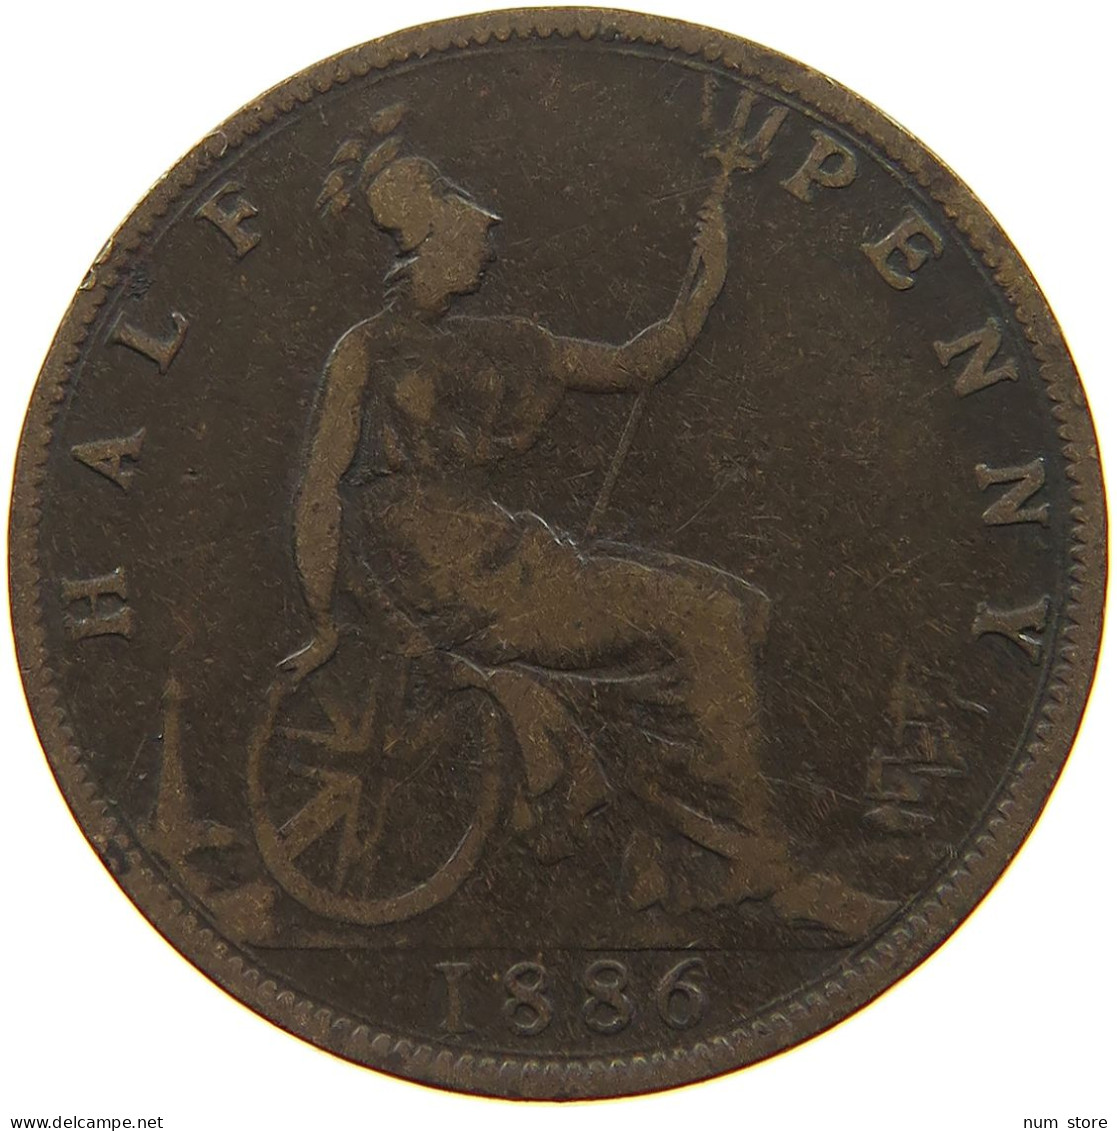 GREAT BRITAIN HALFPENNY 1886 Victoria 1837-1901 #a010 0487 - C. 1/2 Penny